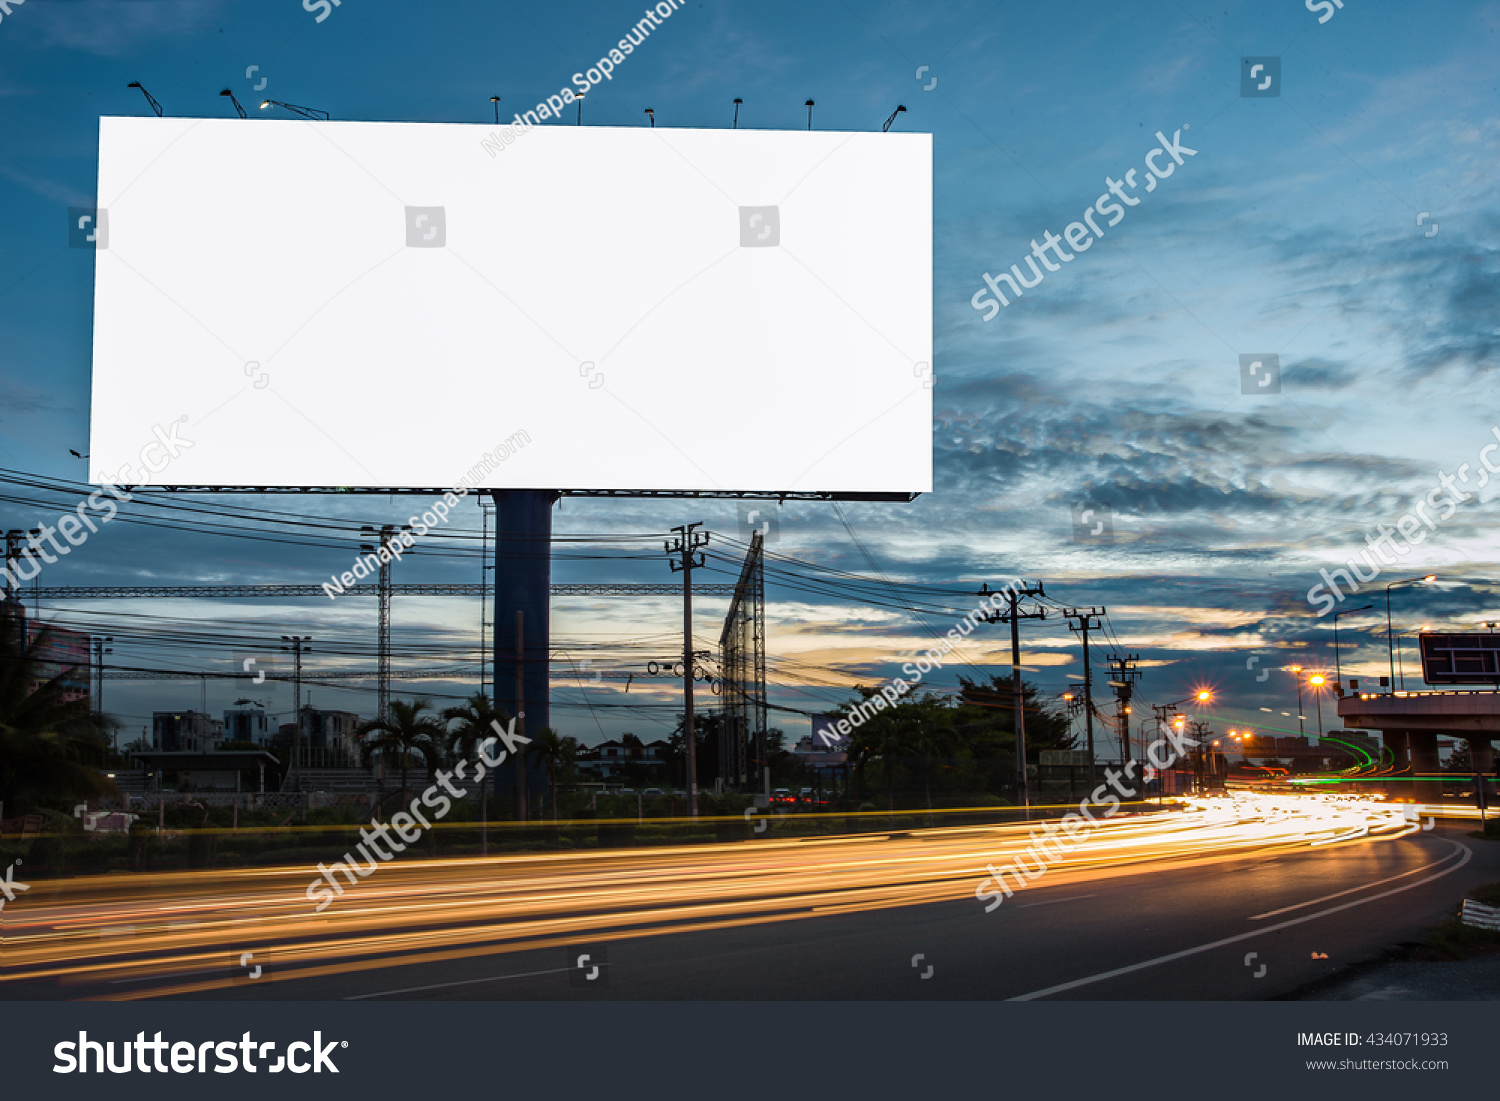 billboard blank for outdoor advertising poster or blank billboard at night time for advertisement. street light #434071933